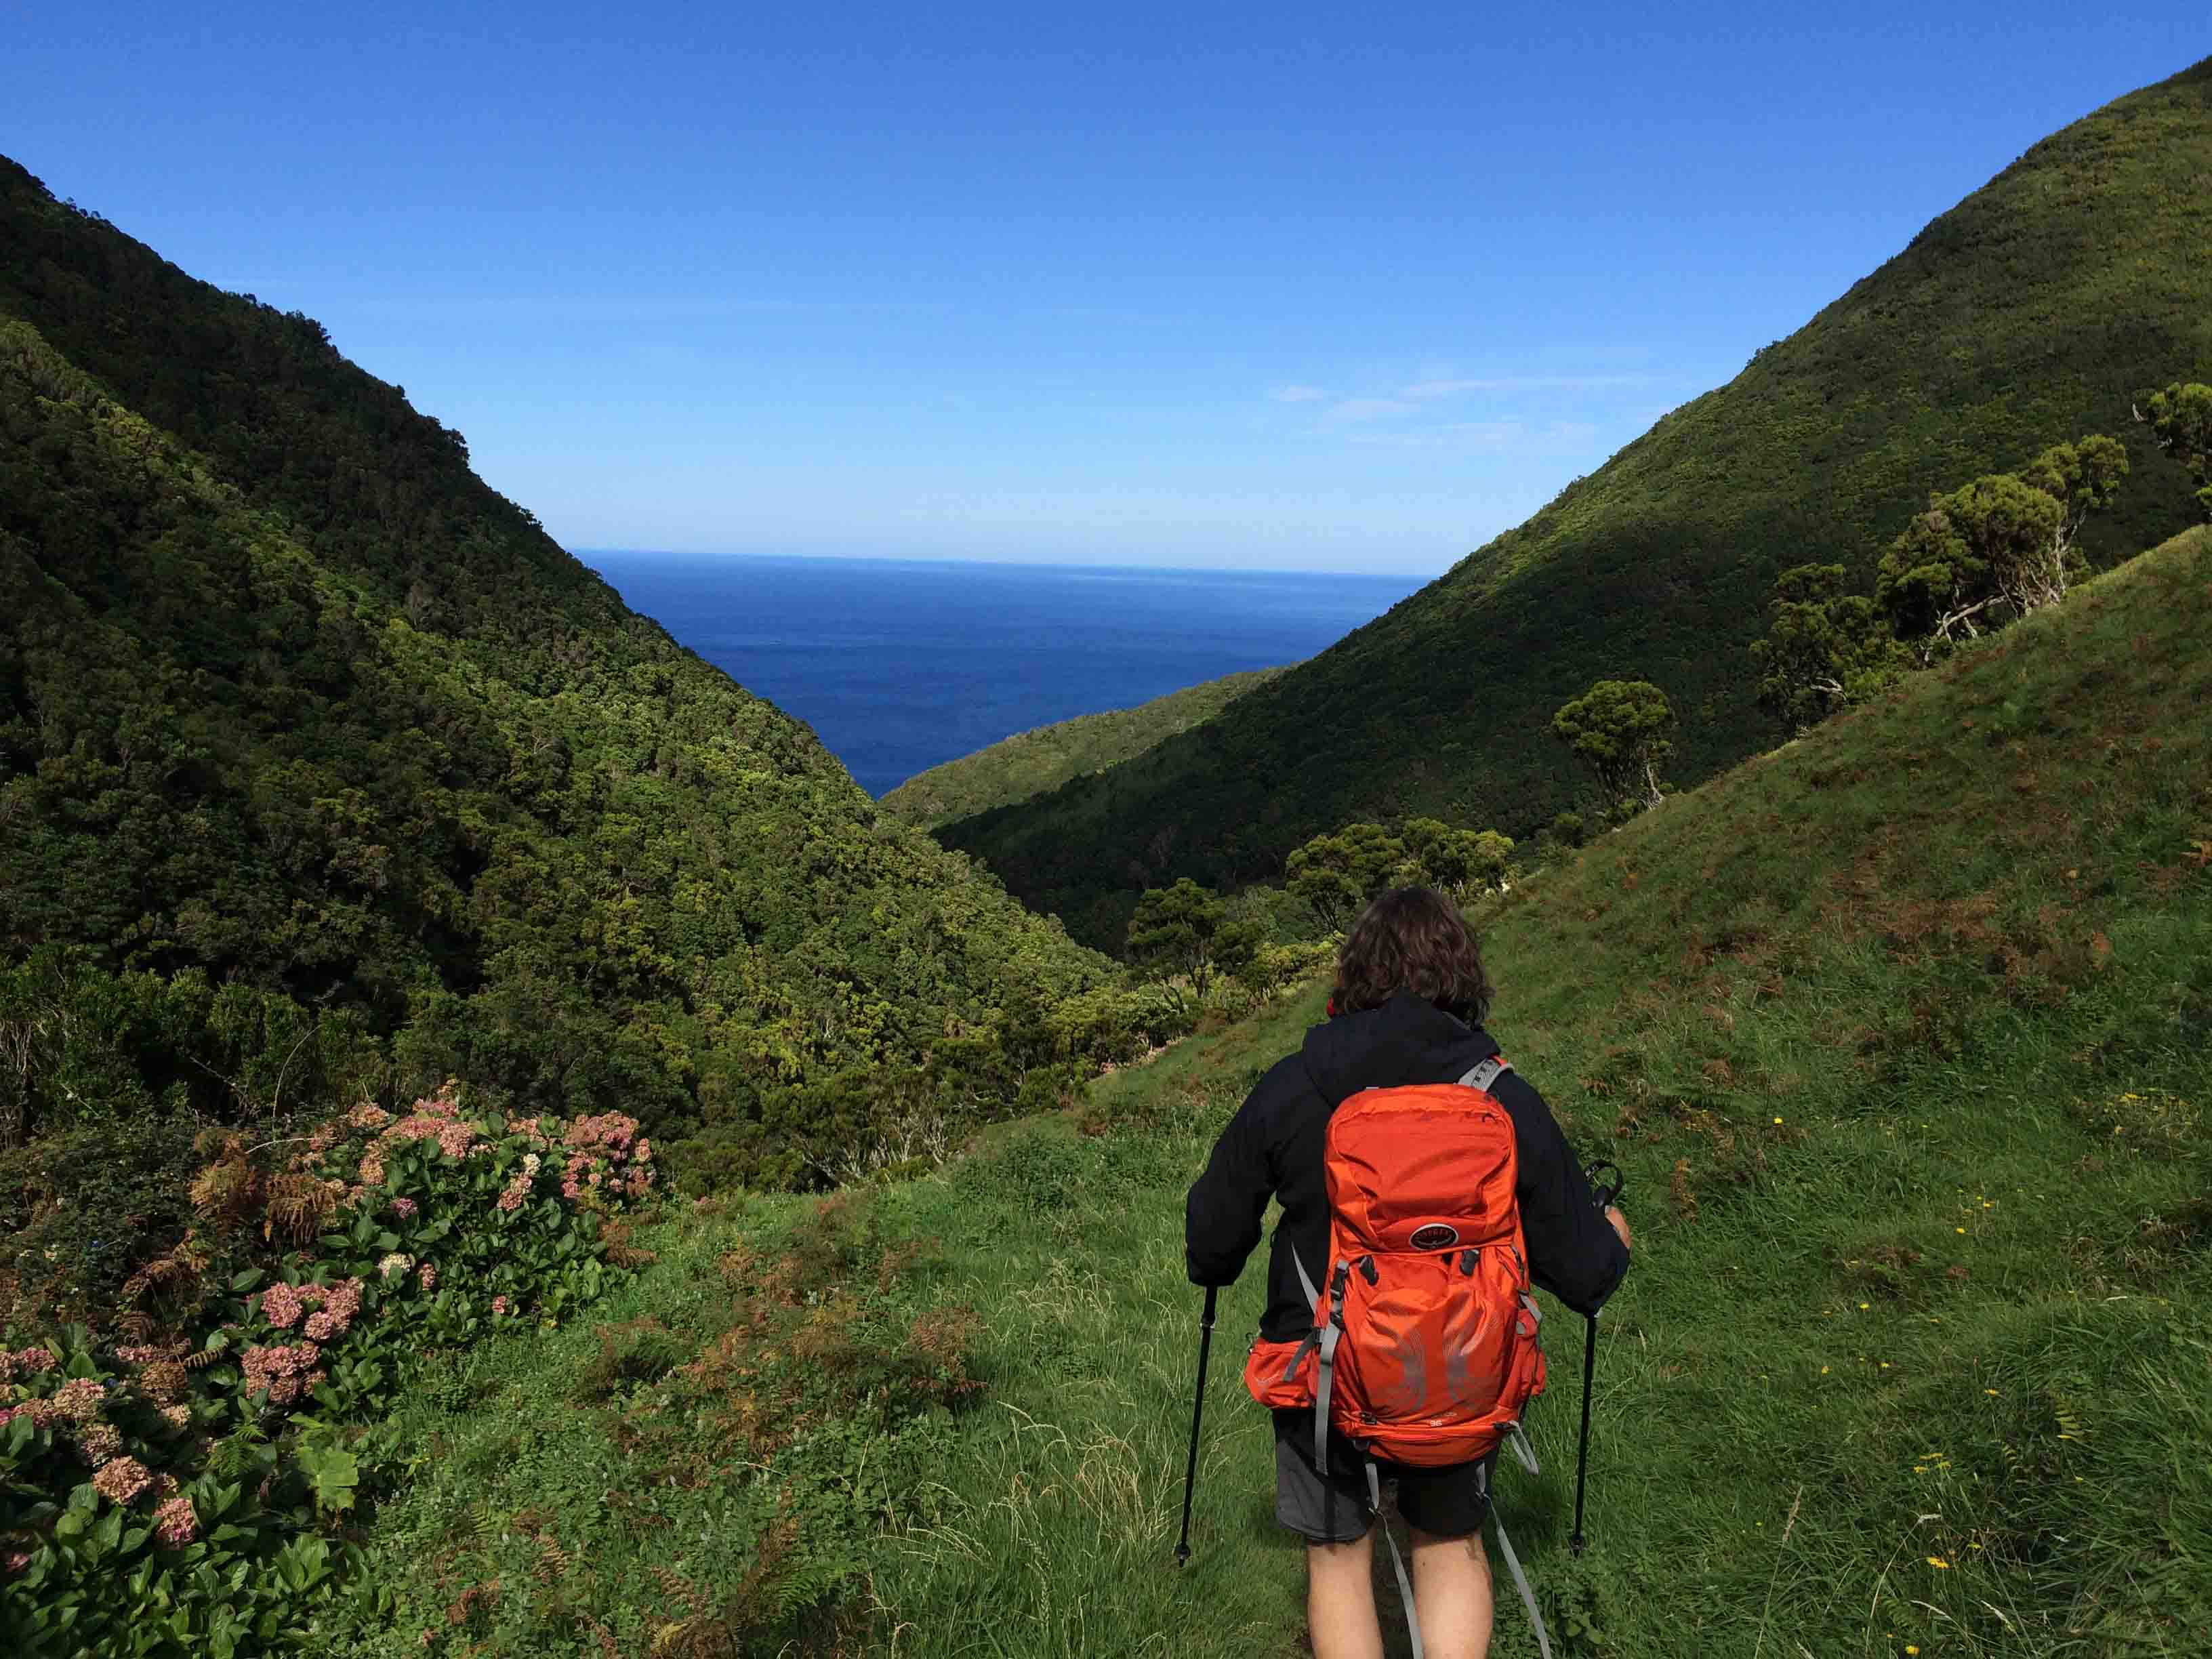 Hiking on Sao Jorge of the Azores Islands